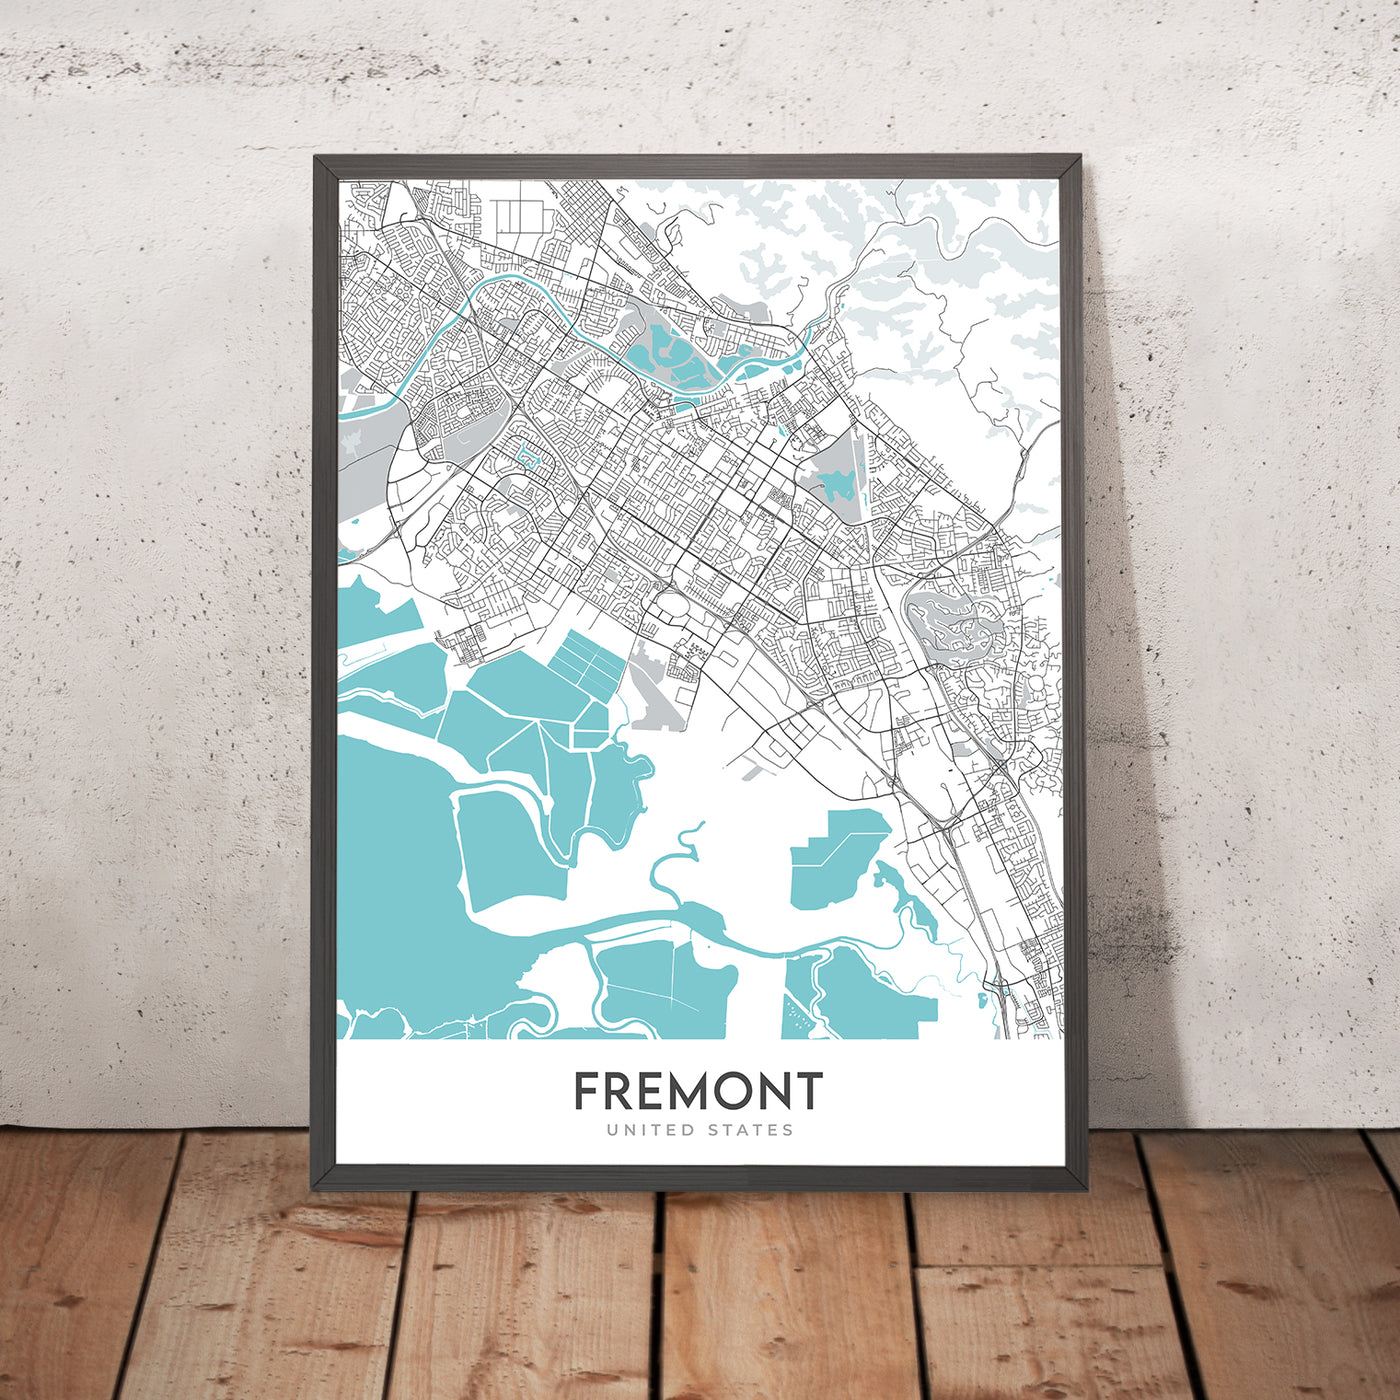 Modern City Map of Fremont, CA: Ardenwood, Mission San Jose, Niles Canyon Railway, Tesla Factory, Warm Springs